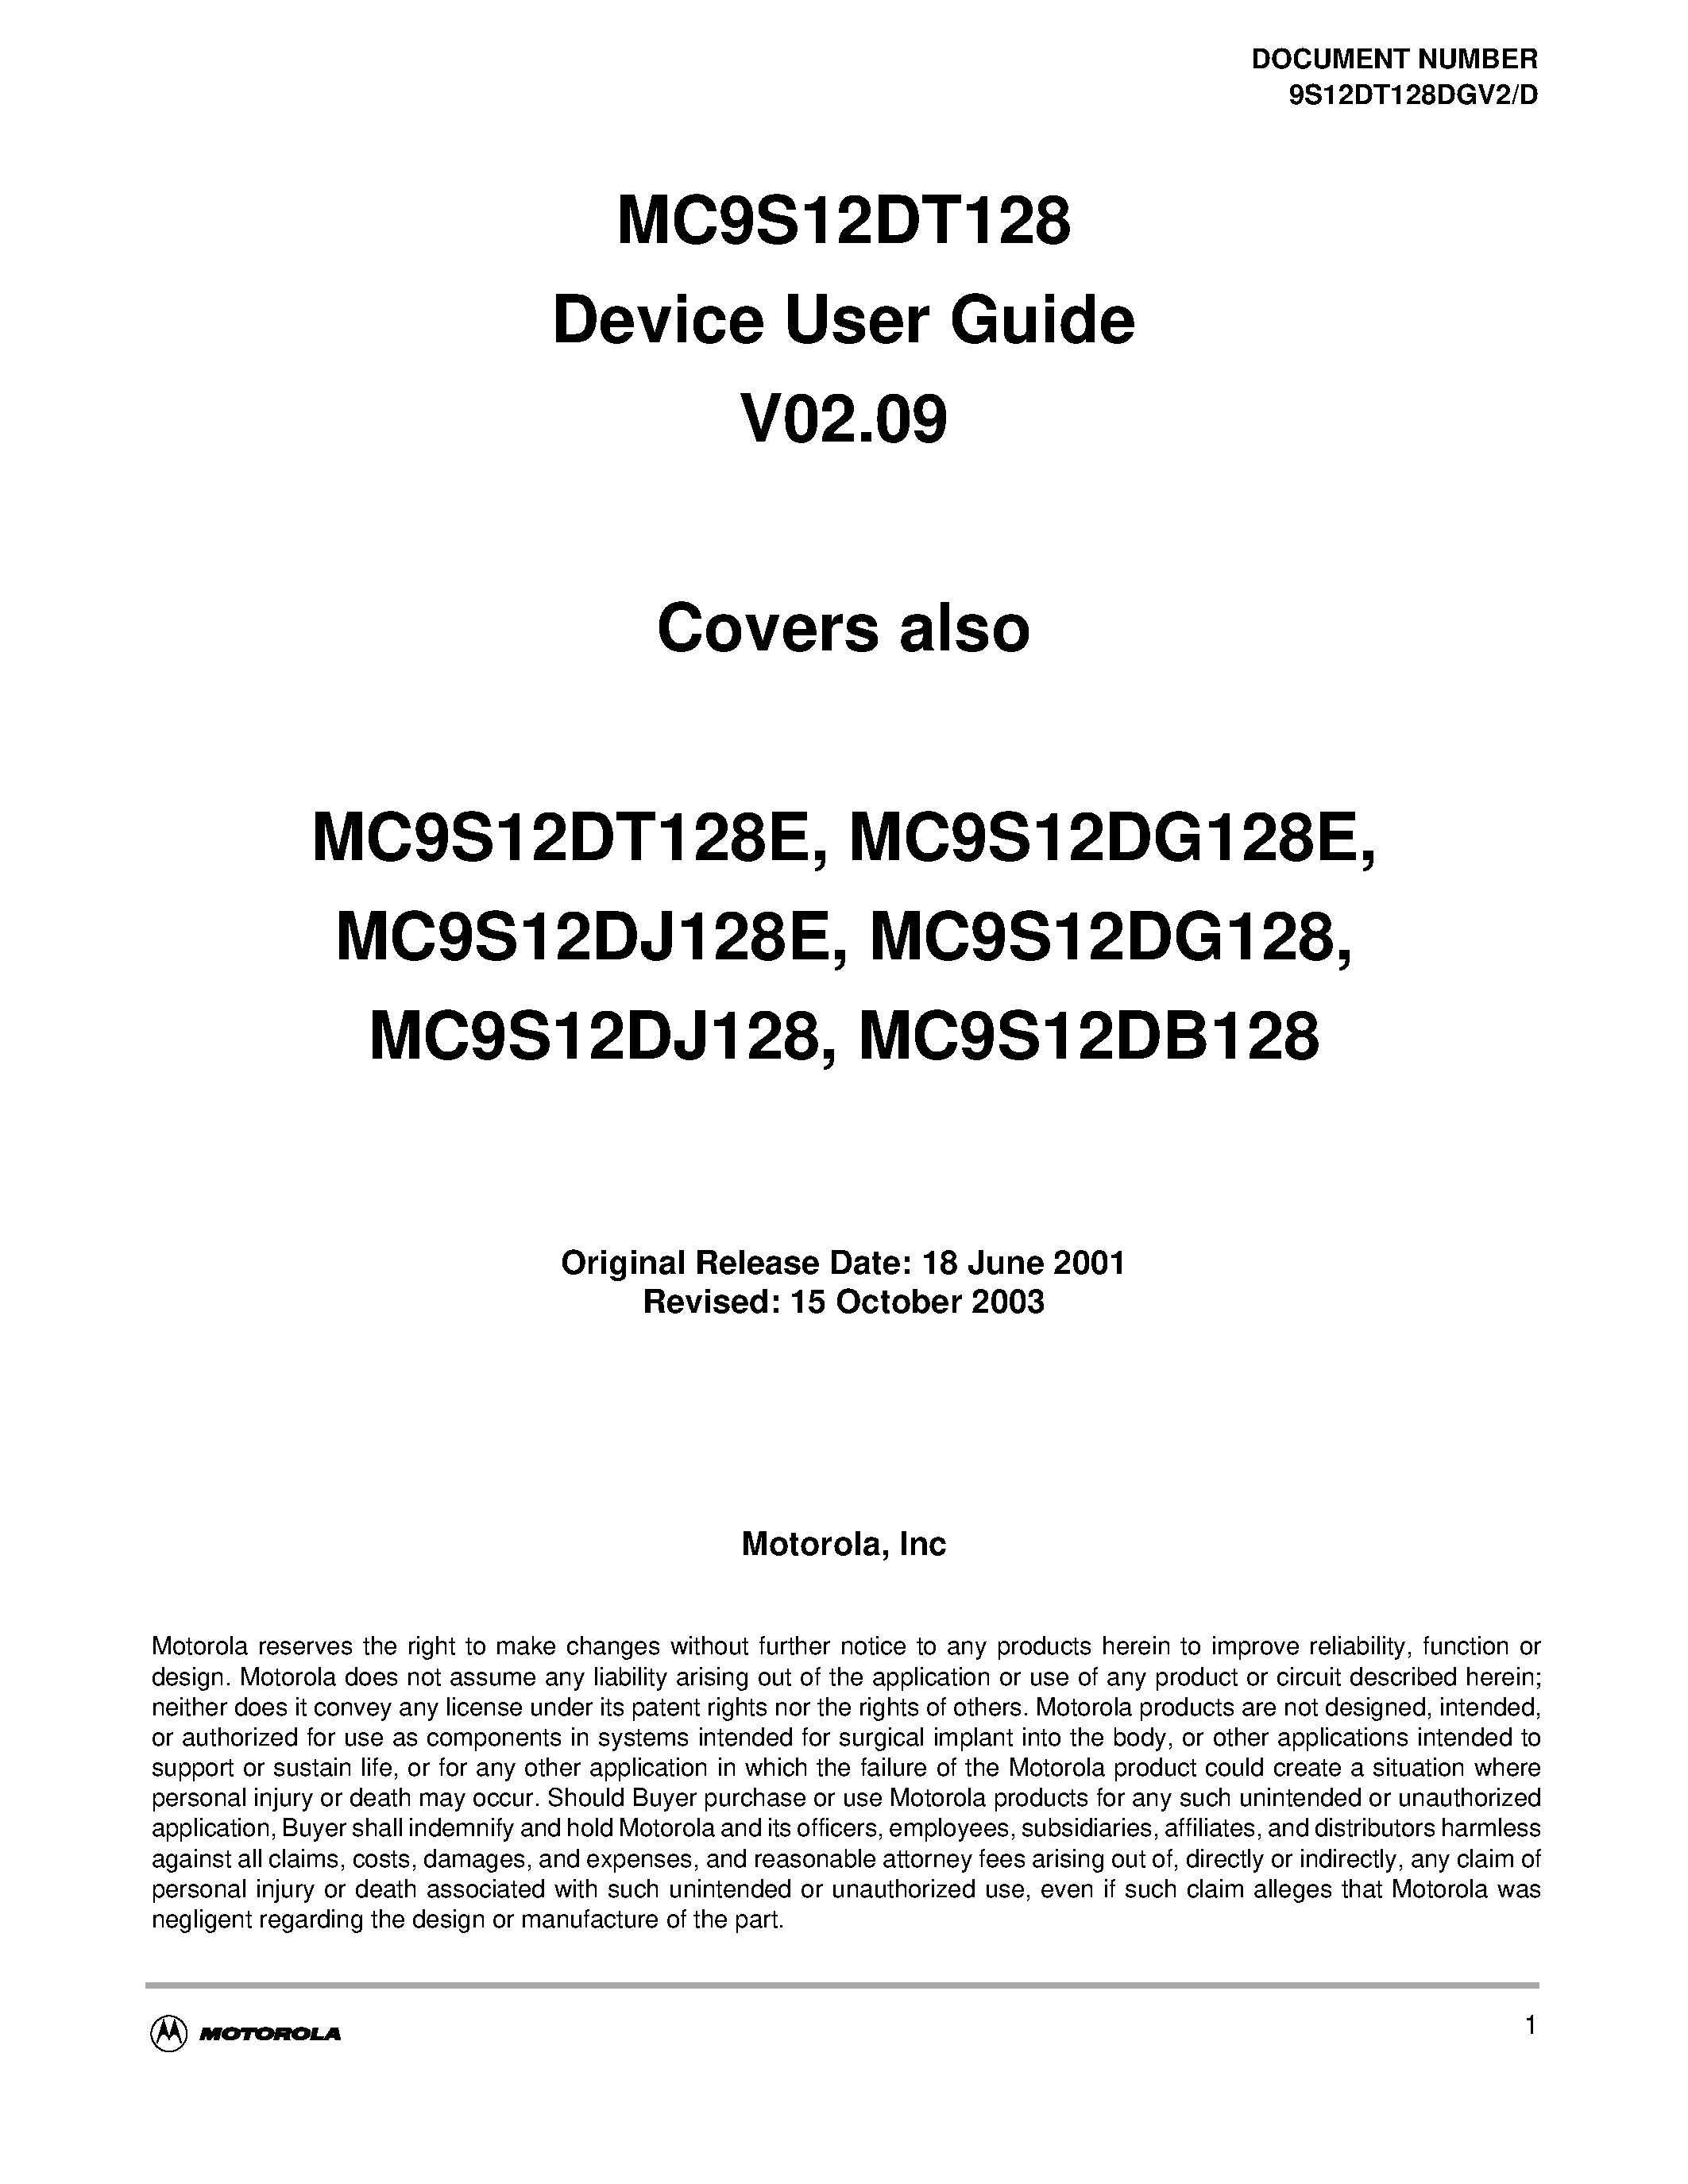 Даташит S12PWM8B8CV1D - MC9S12DT128 Device User Guide V02.09 страница 1